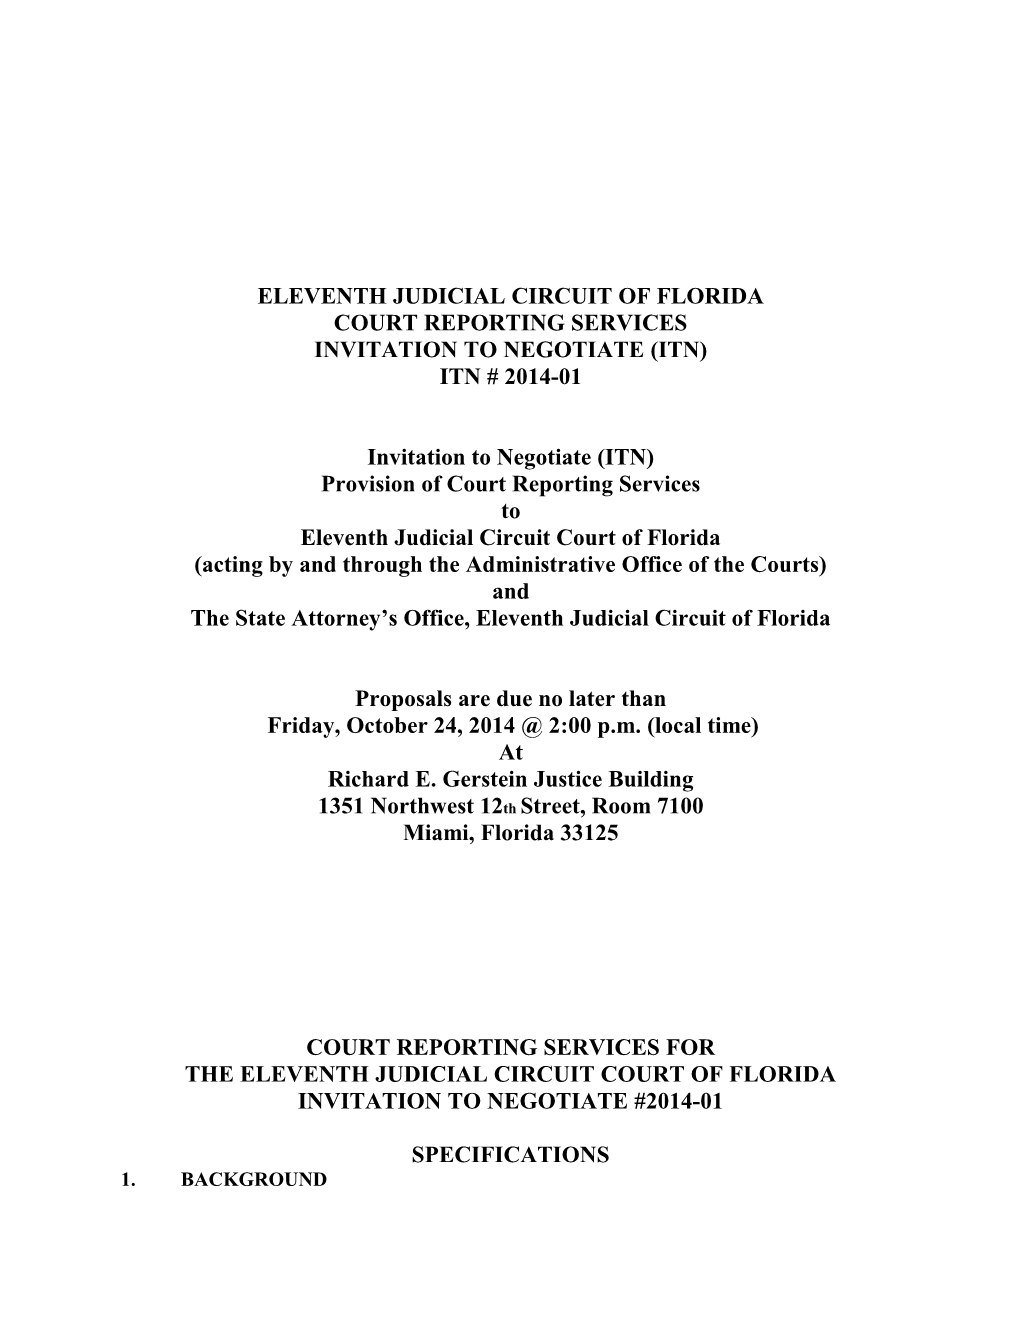 Eleventh Judicial Circuit of Florida